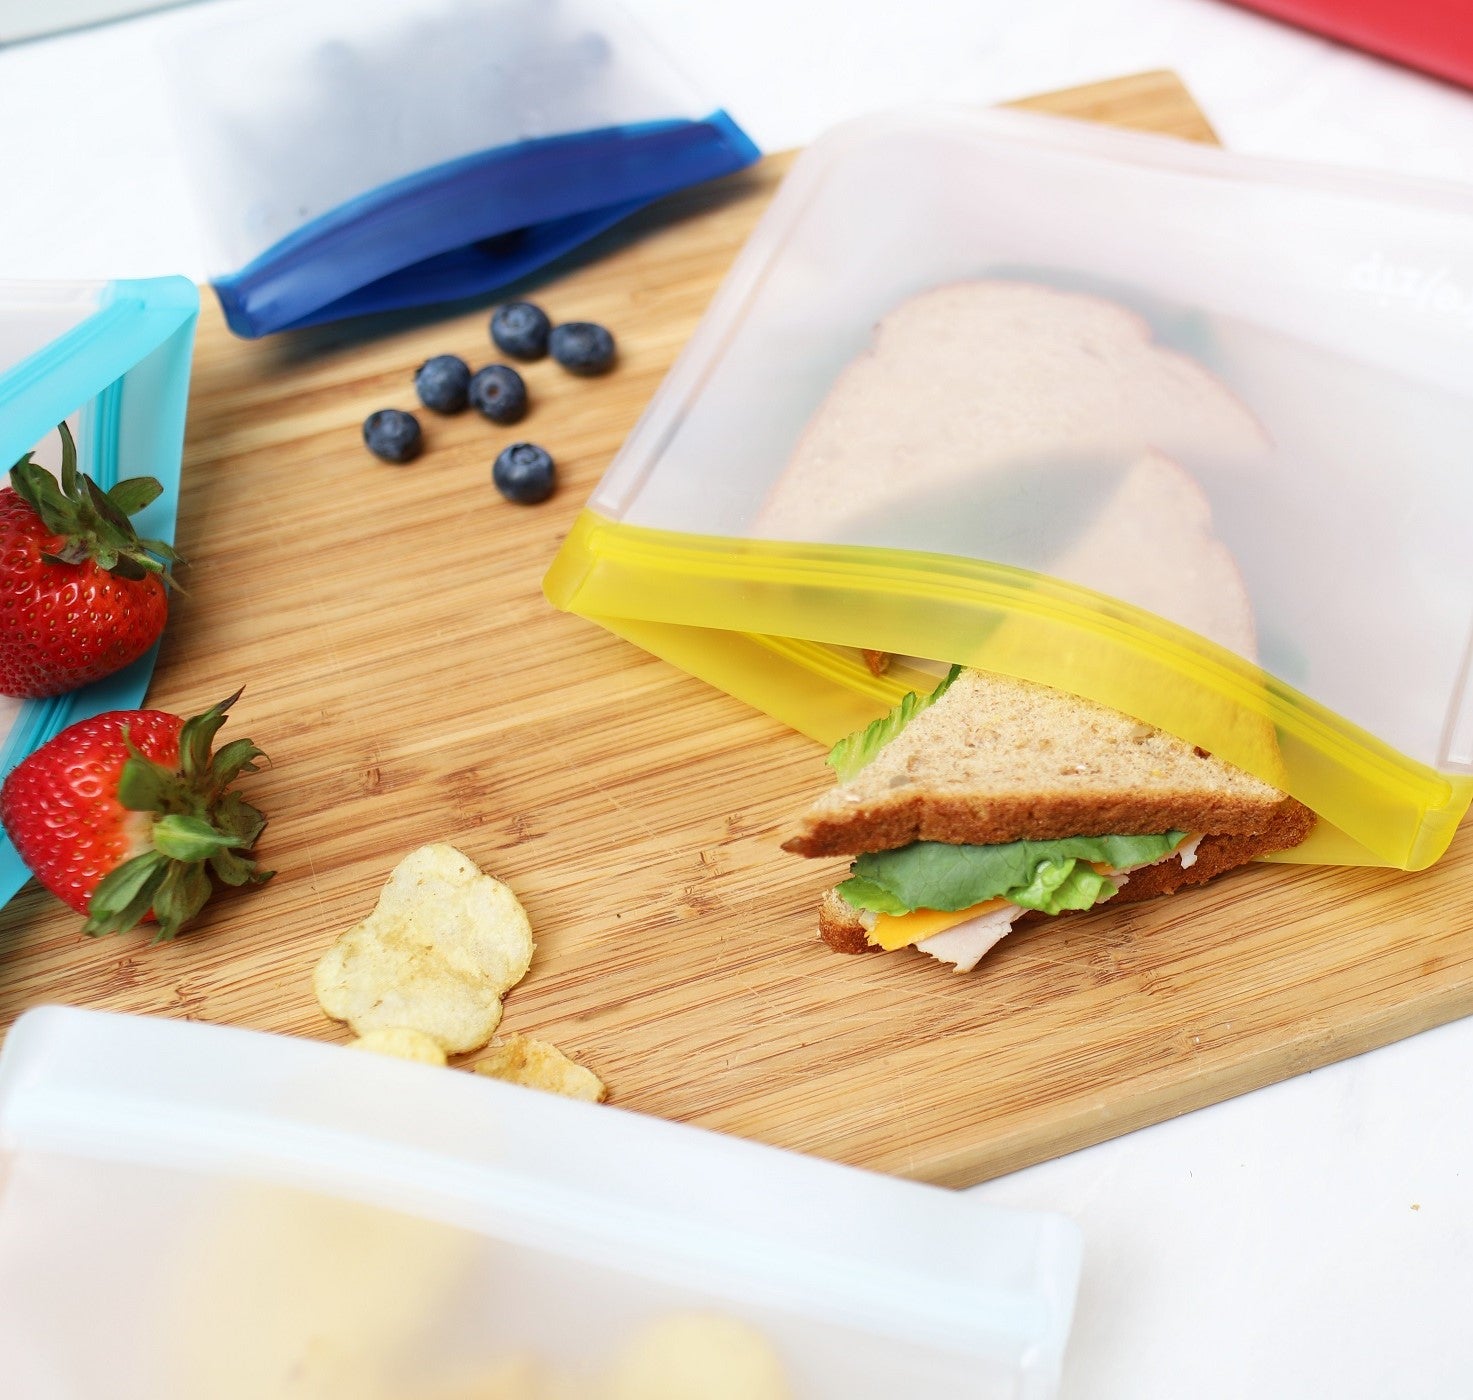 Reusable Food Bags, Leakproof Ziplock Gallon Freezer Bags for  Sandwich,Fruit,Snack,Meat,Meal Prep,Home Organization,Orange 